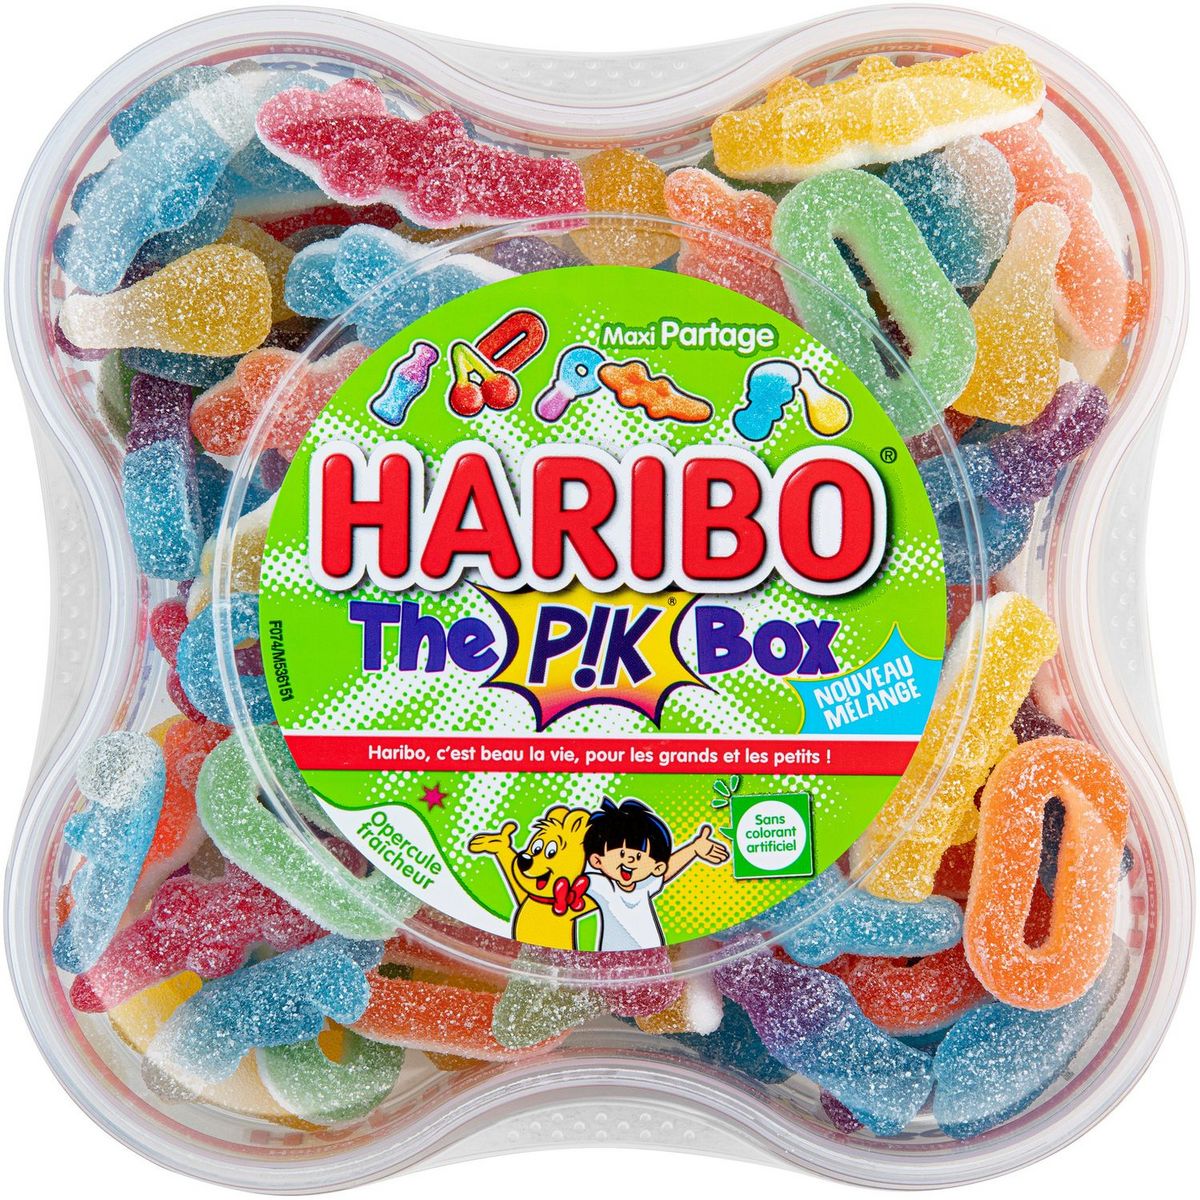 Haribo The Pik Box